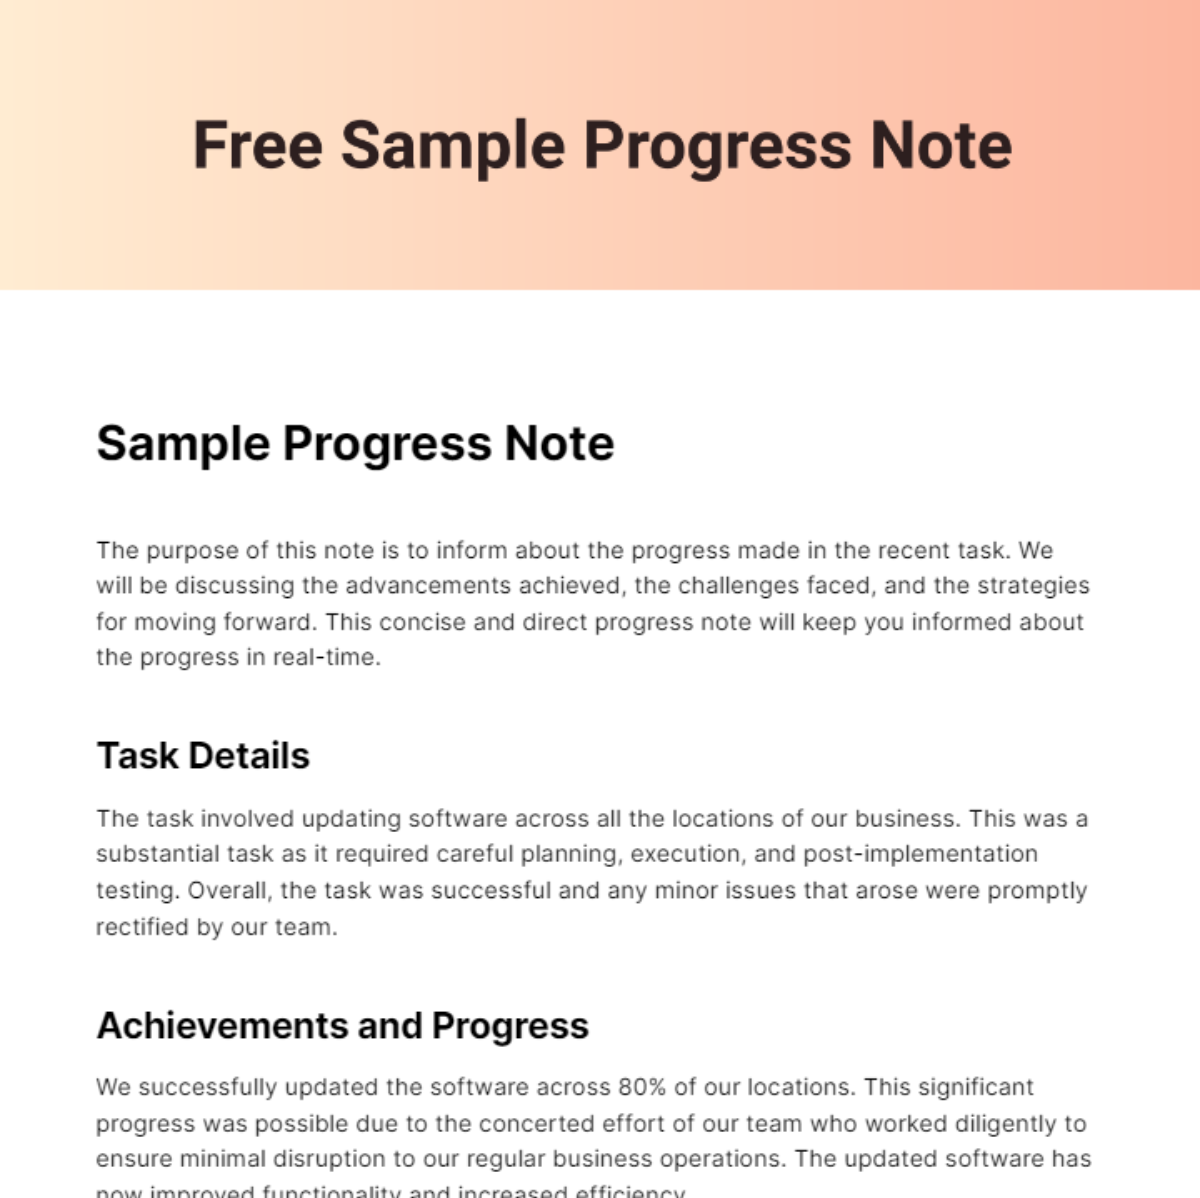 Free Sample Progress Note Template